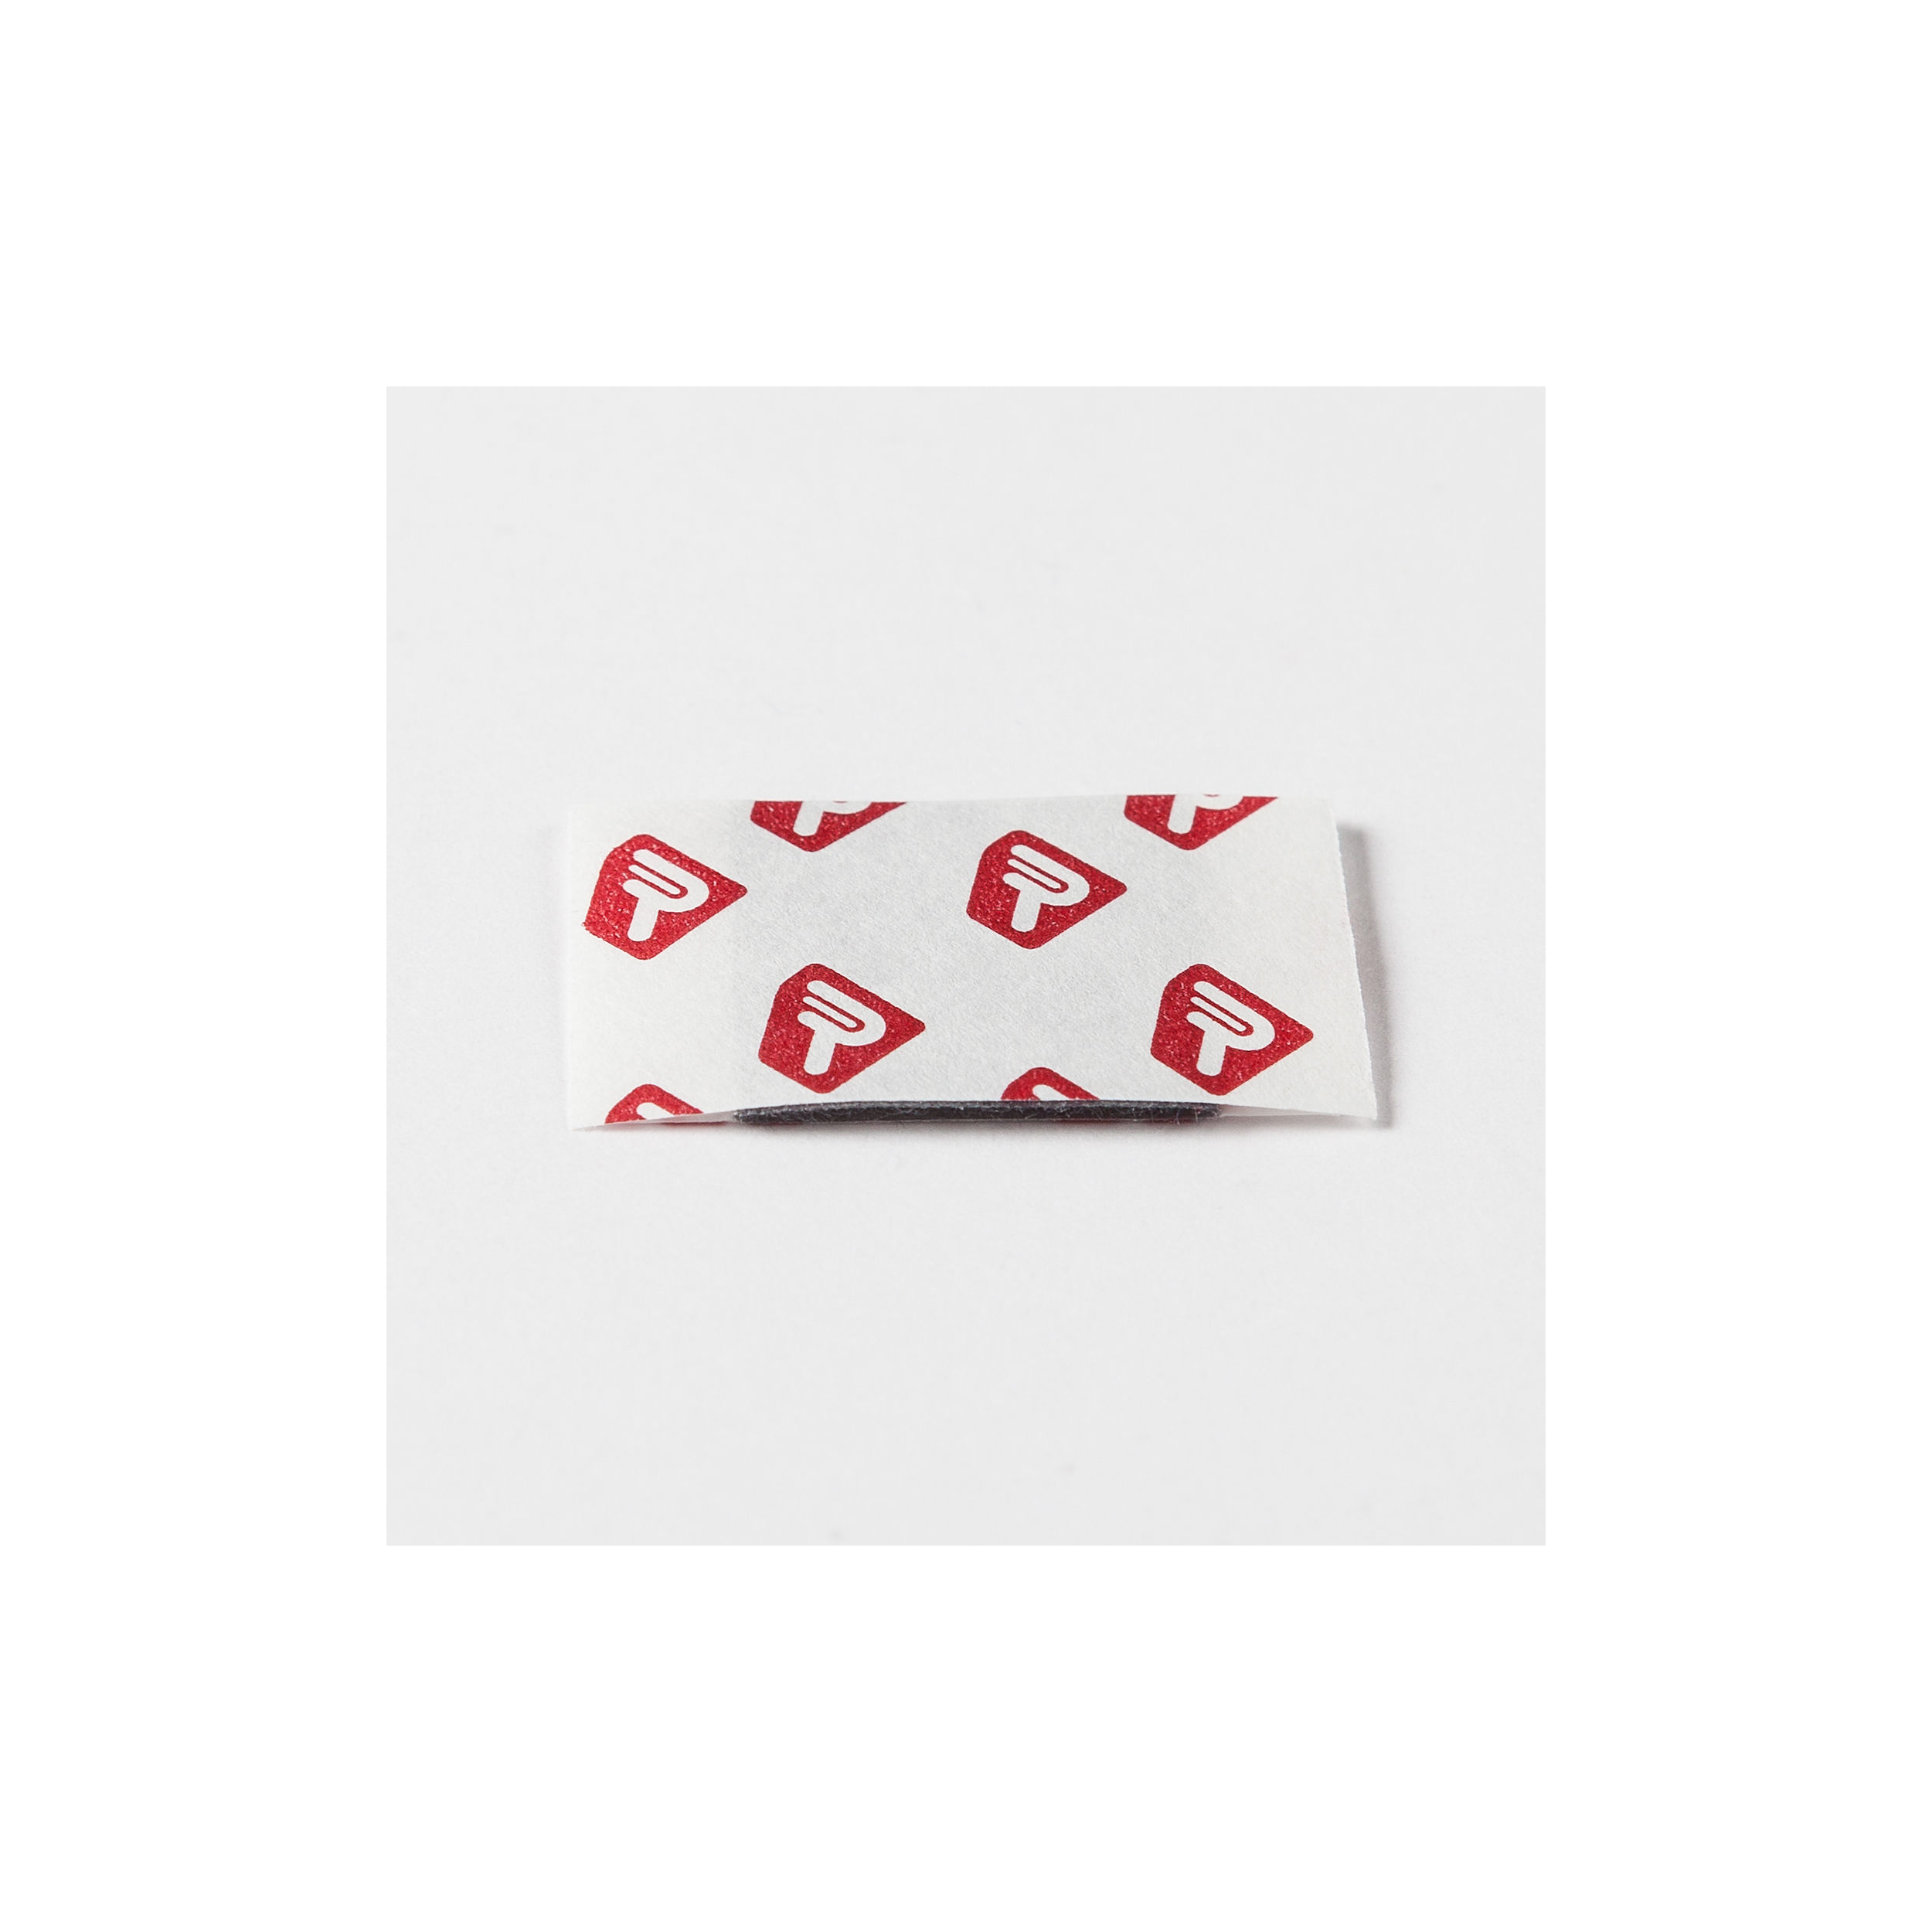 Rycote Stickies Adv, 20mm Squared (Bag of 100)